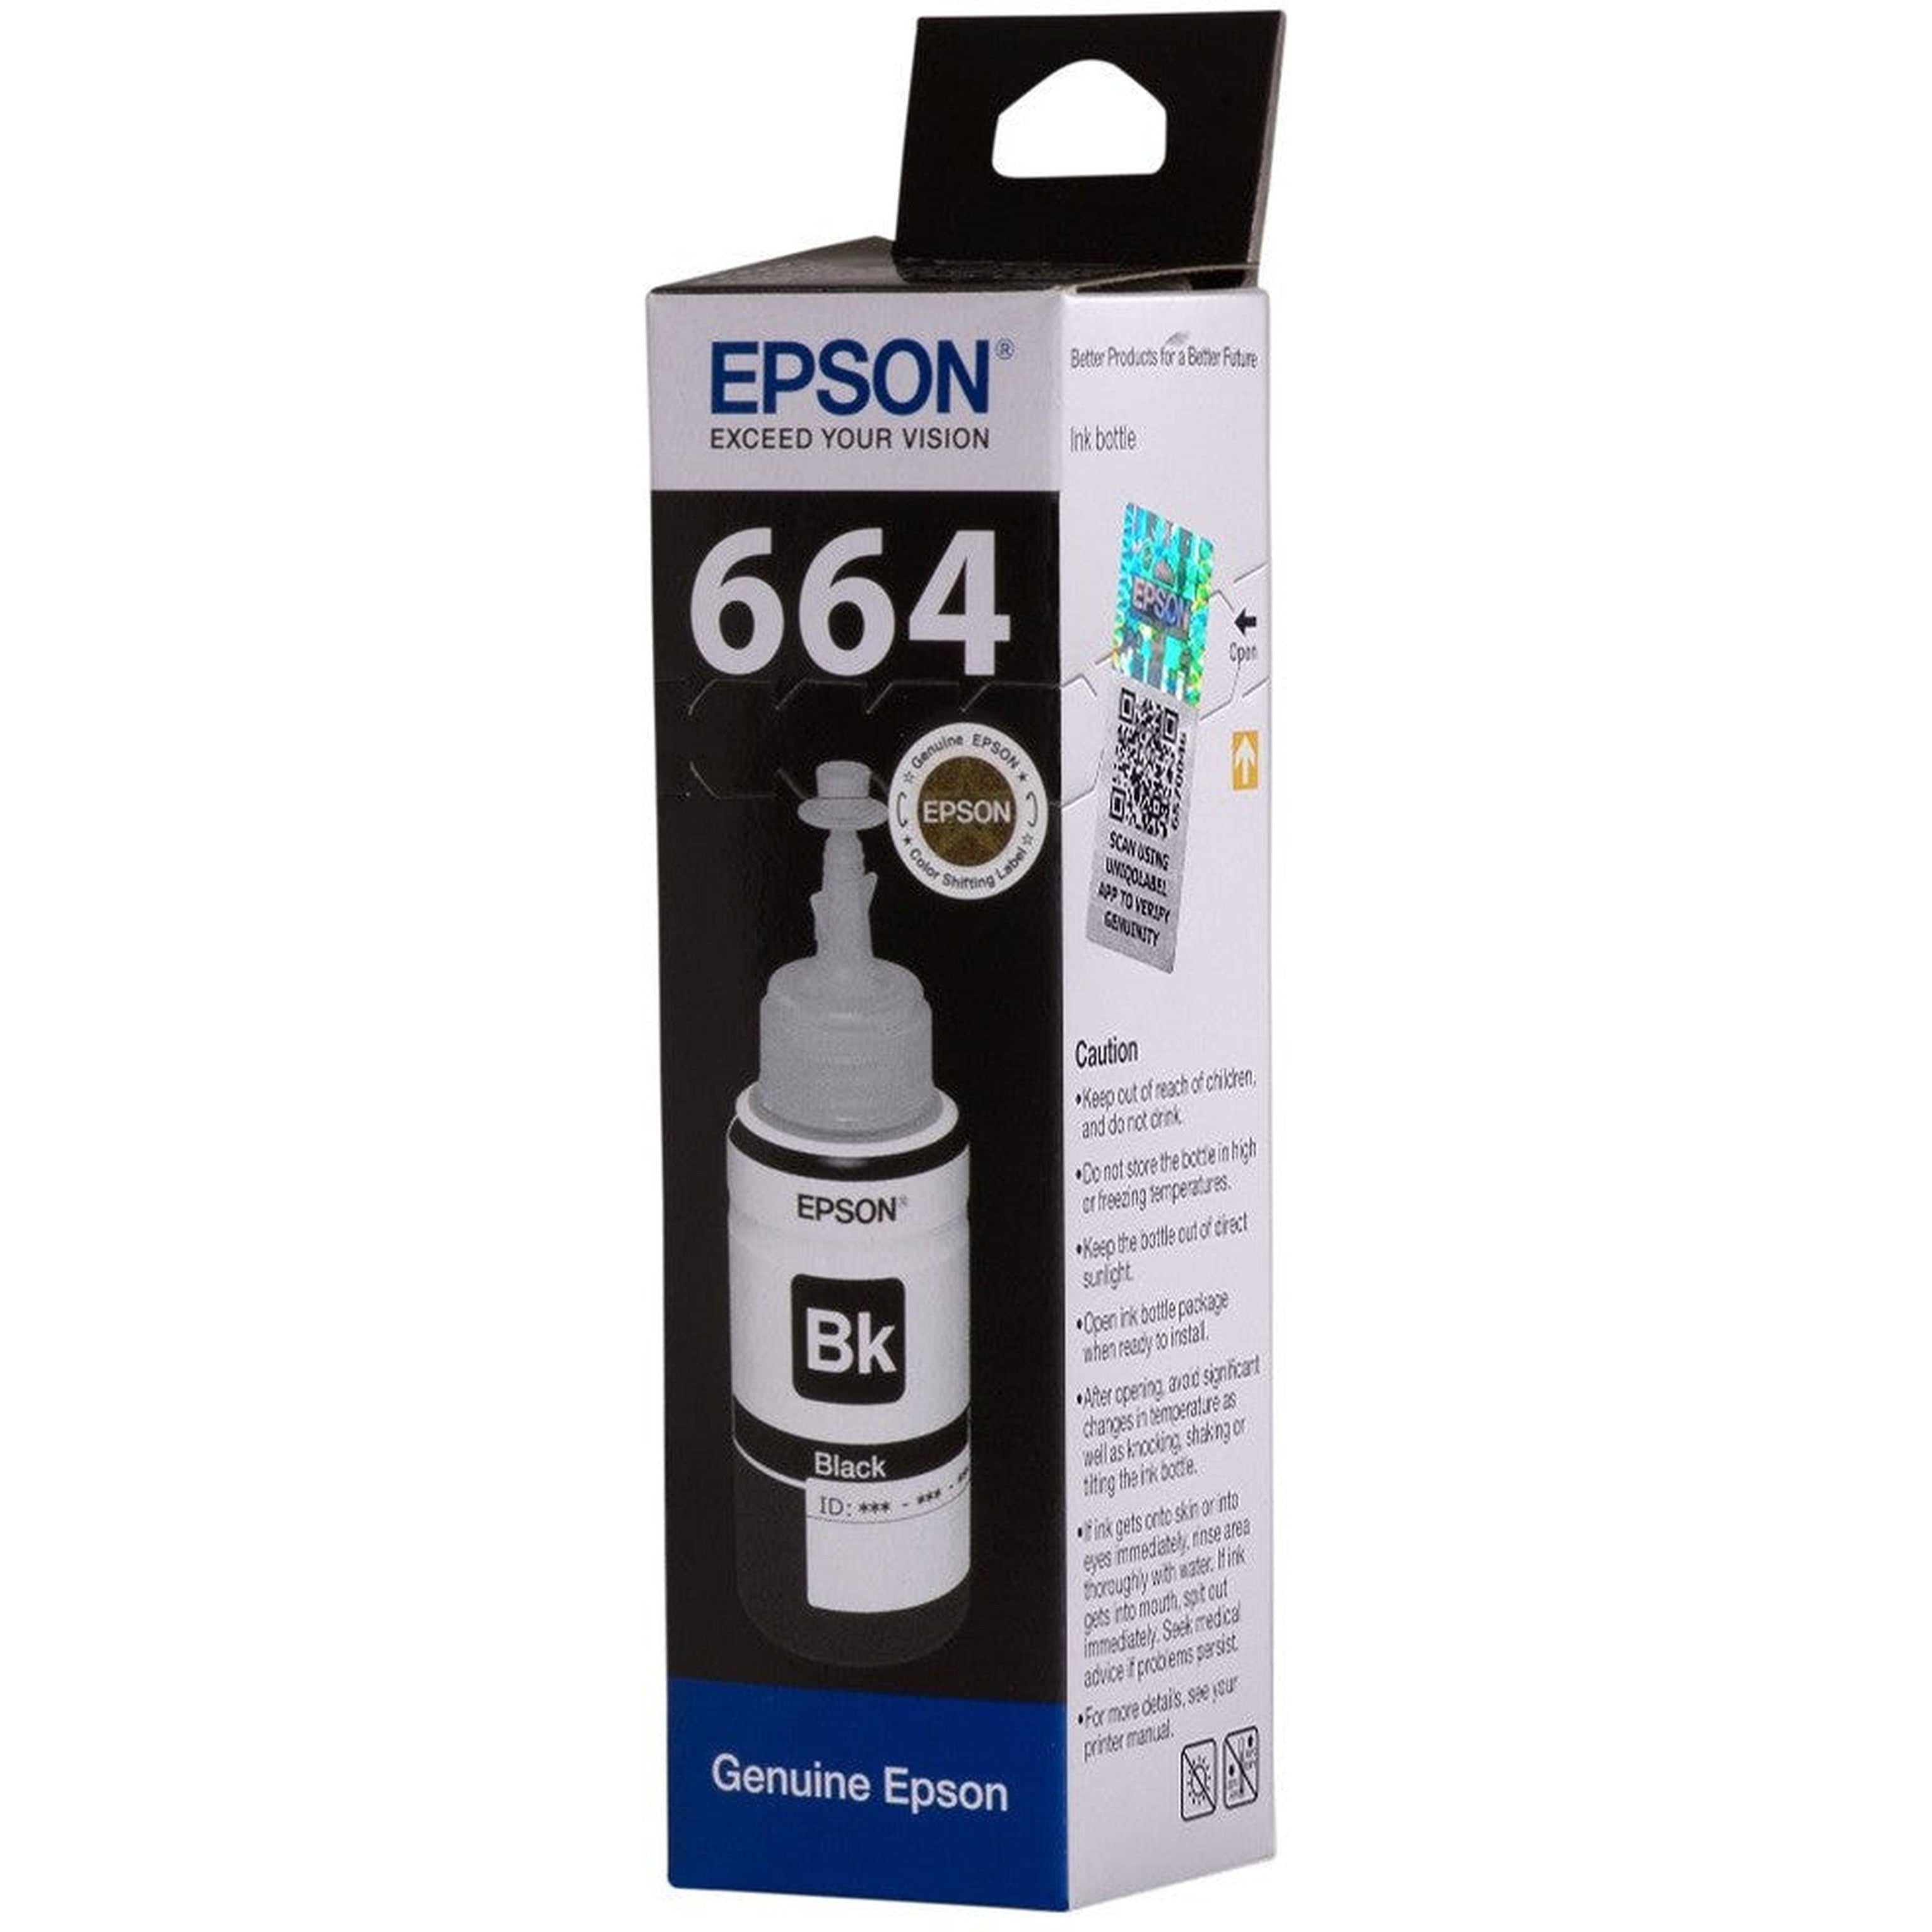 Epson Black Ink Bottle 664 70Ml-Inks And Toners-Epson-Star Light Kuwait